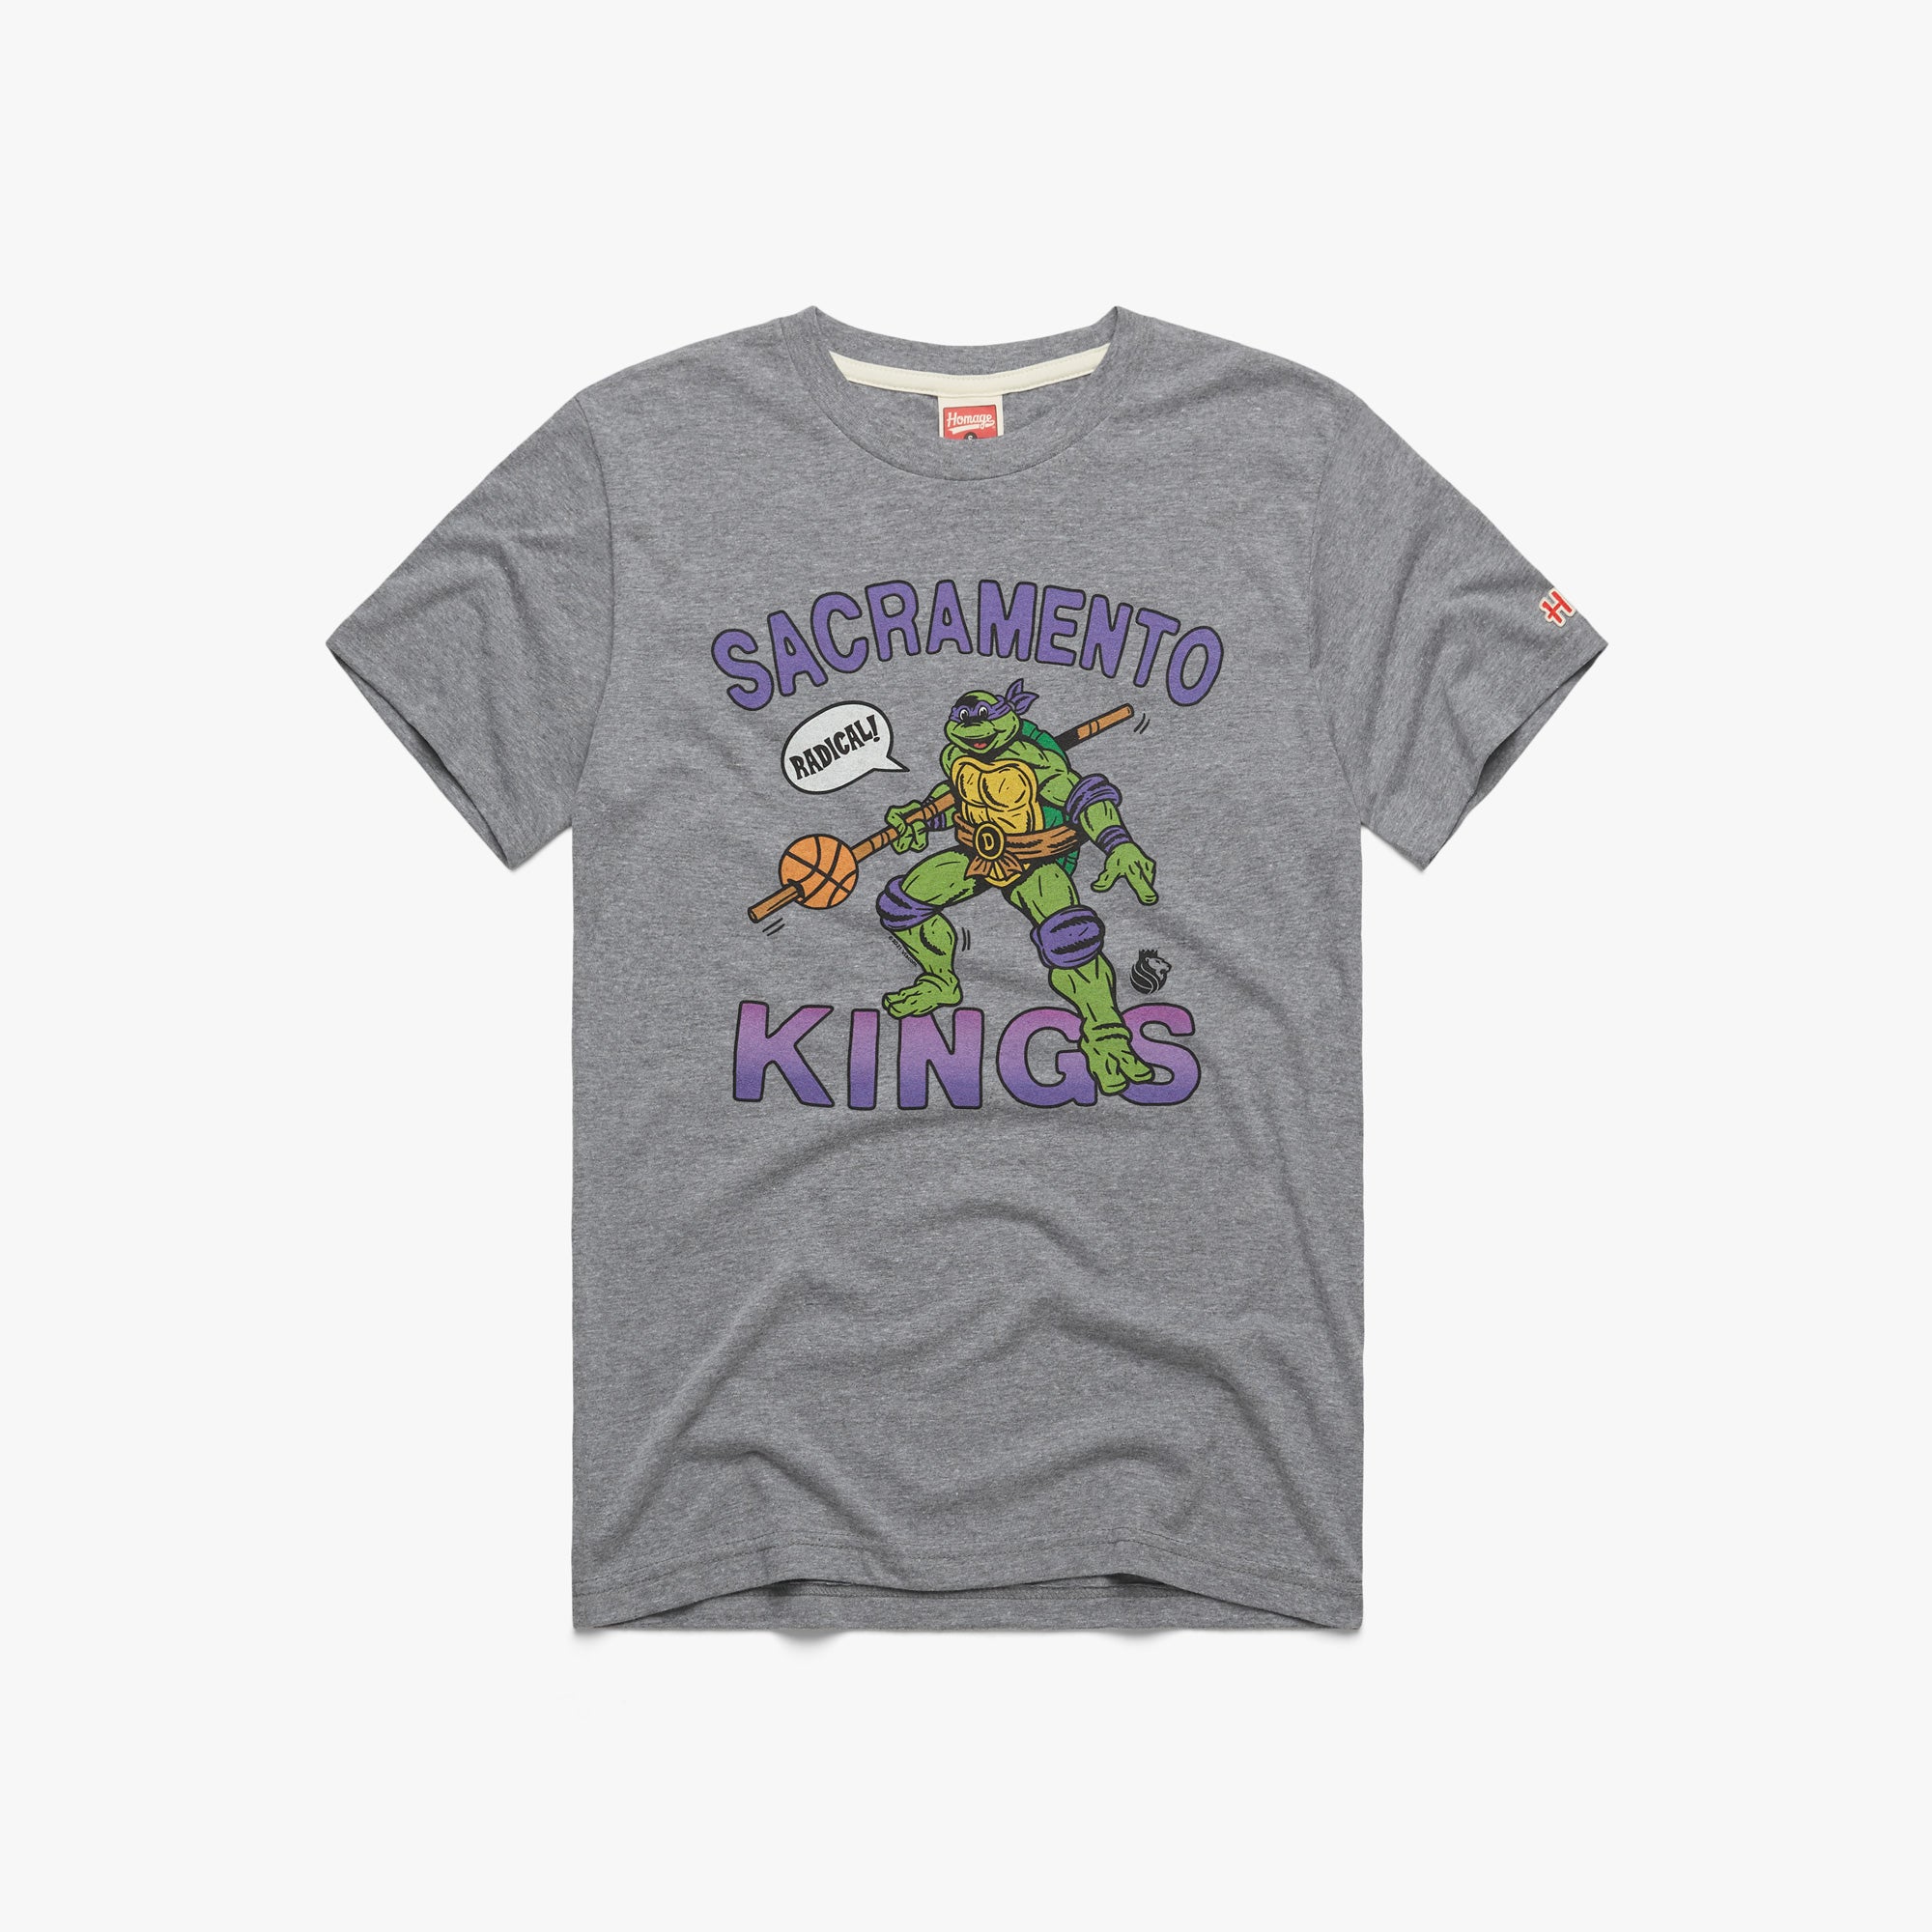 Teenage Mutant Ninja Turtles Donatello Chest Long Sleeve T-Shirt 100% Cotton / 2XL / Green